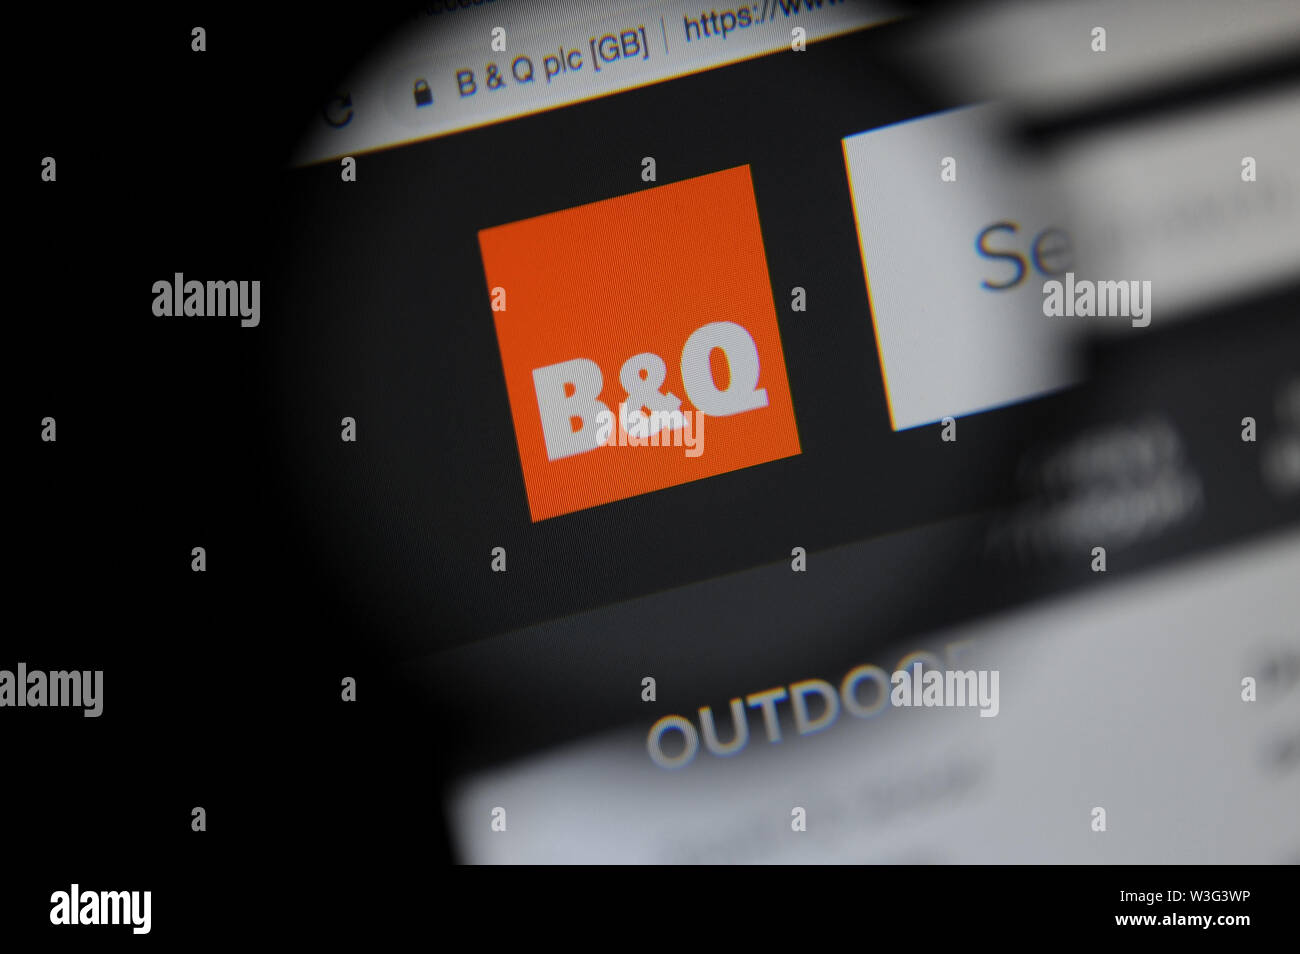 B&Q website seen through a magnifying glass Stock Photo